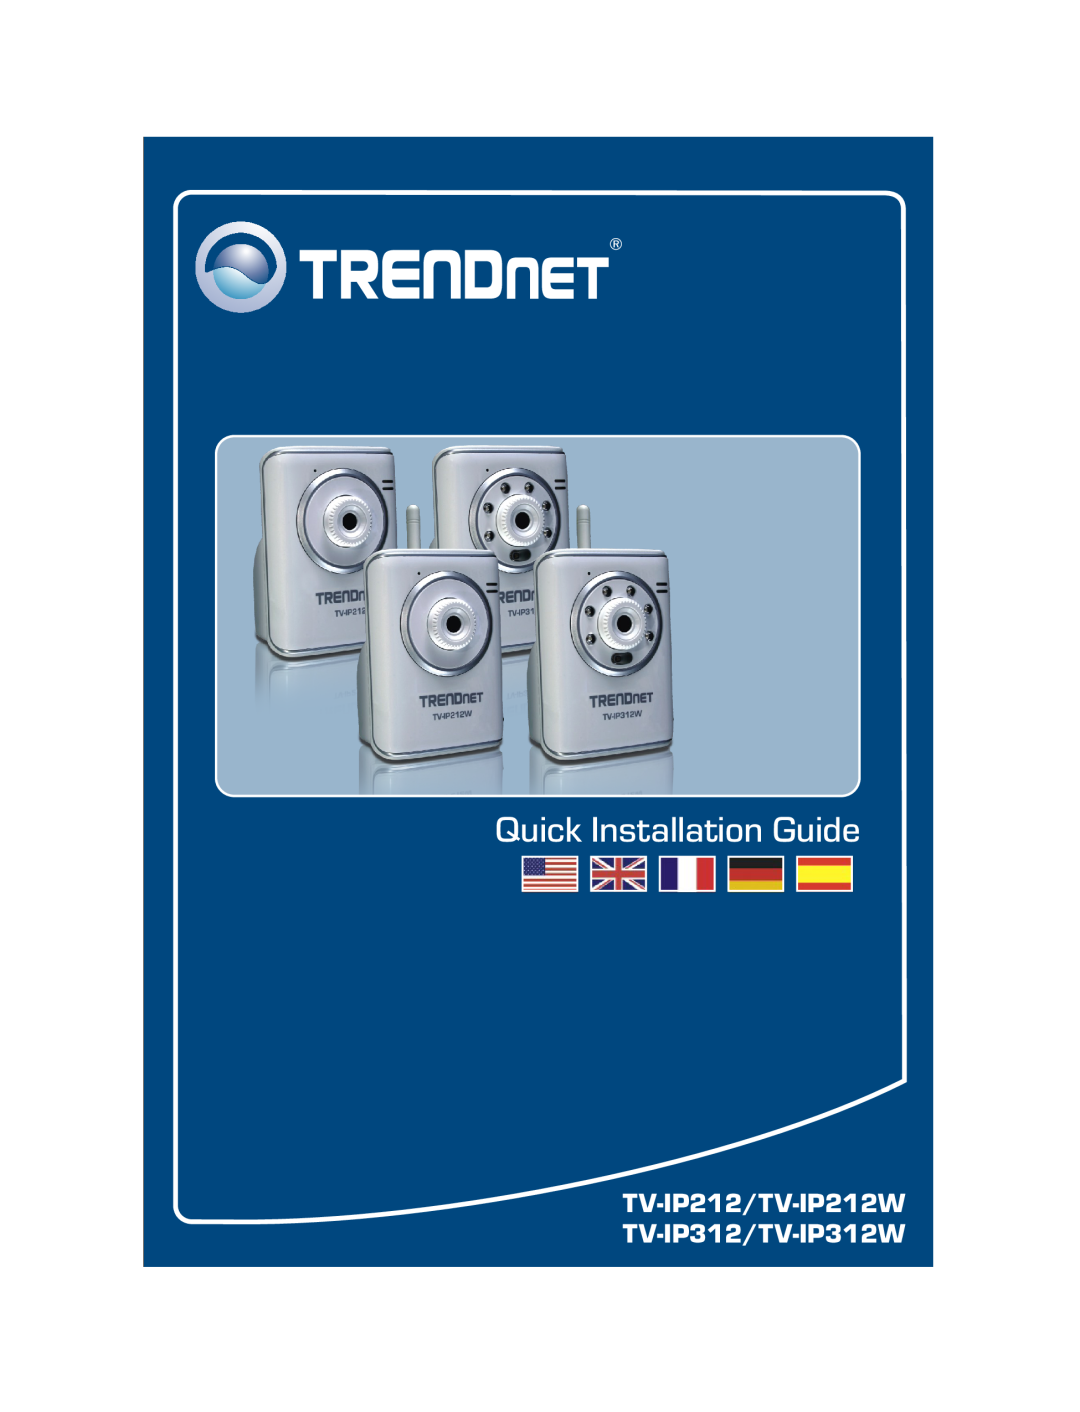 TRENDnet TV-IP410WN, TRENDNET manual 1.01, Quick Installation Guide 